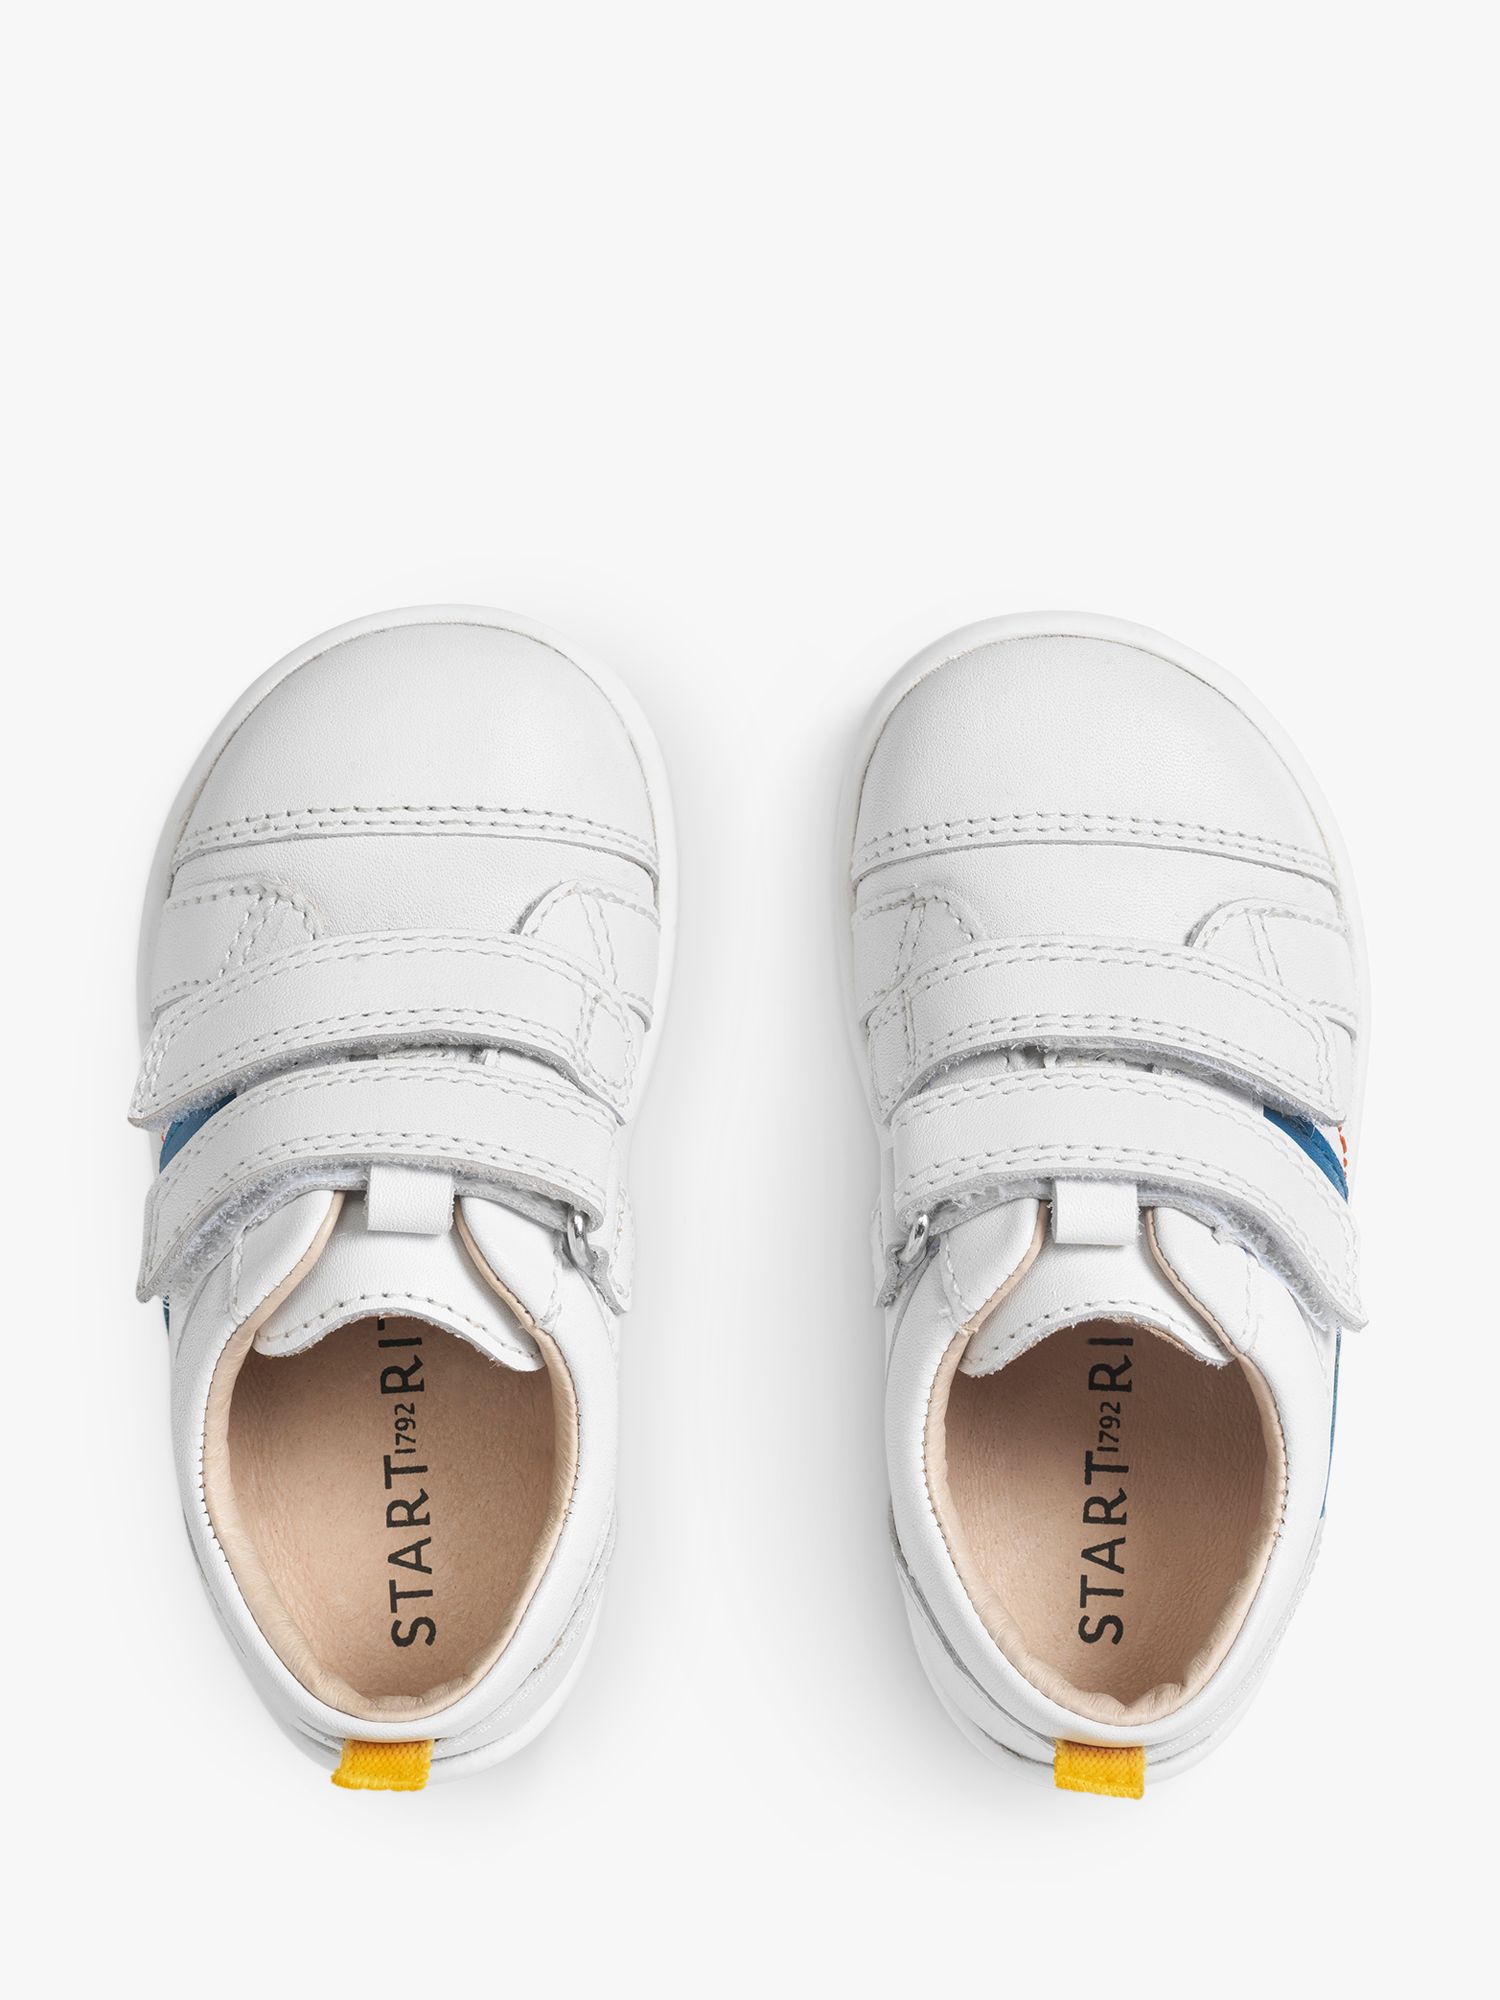 Start-Rite Baby Maze Leather Pre Walker Shoes, White, 5.5F Jnr